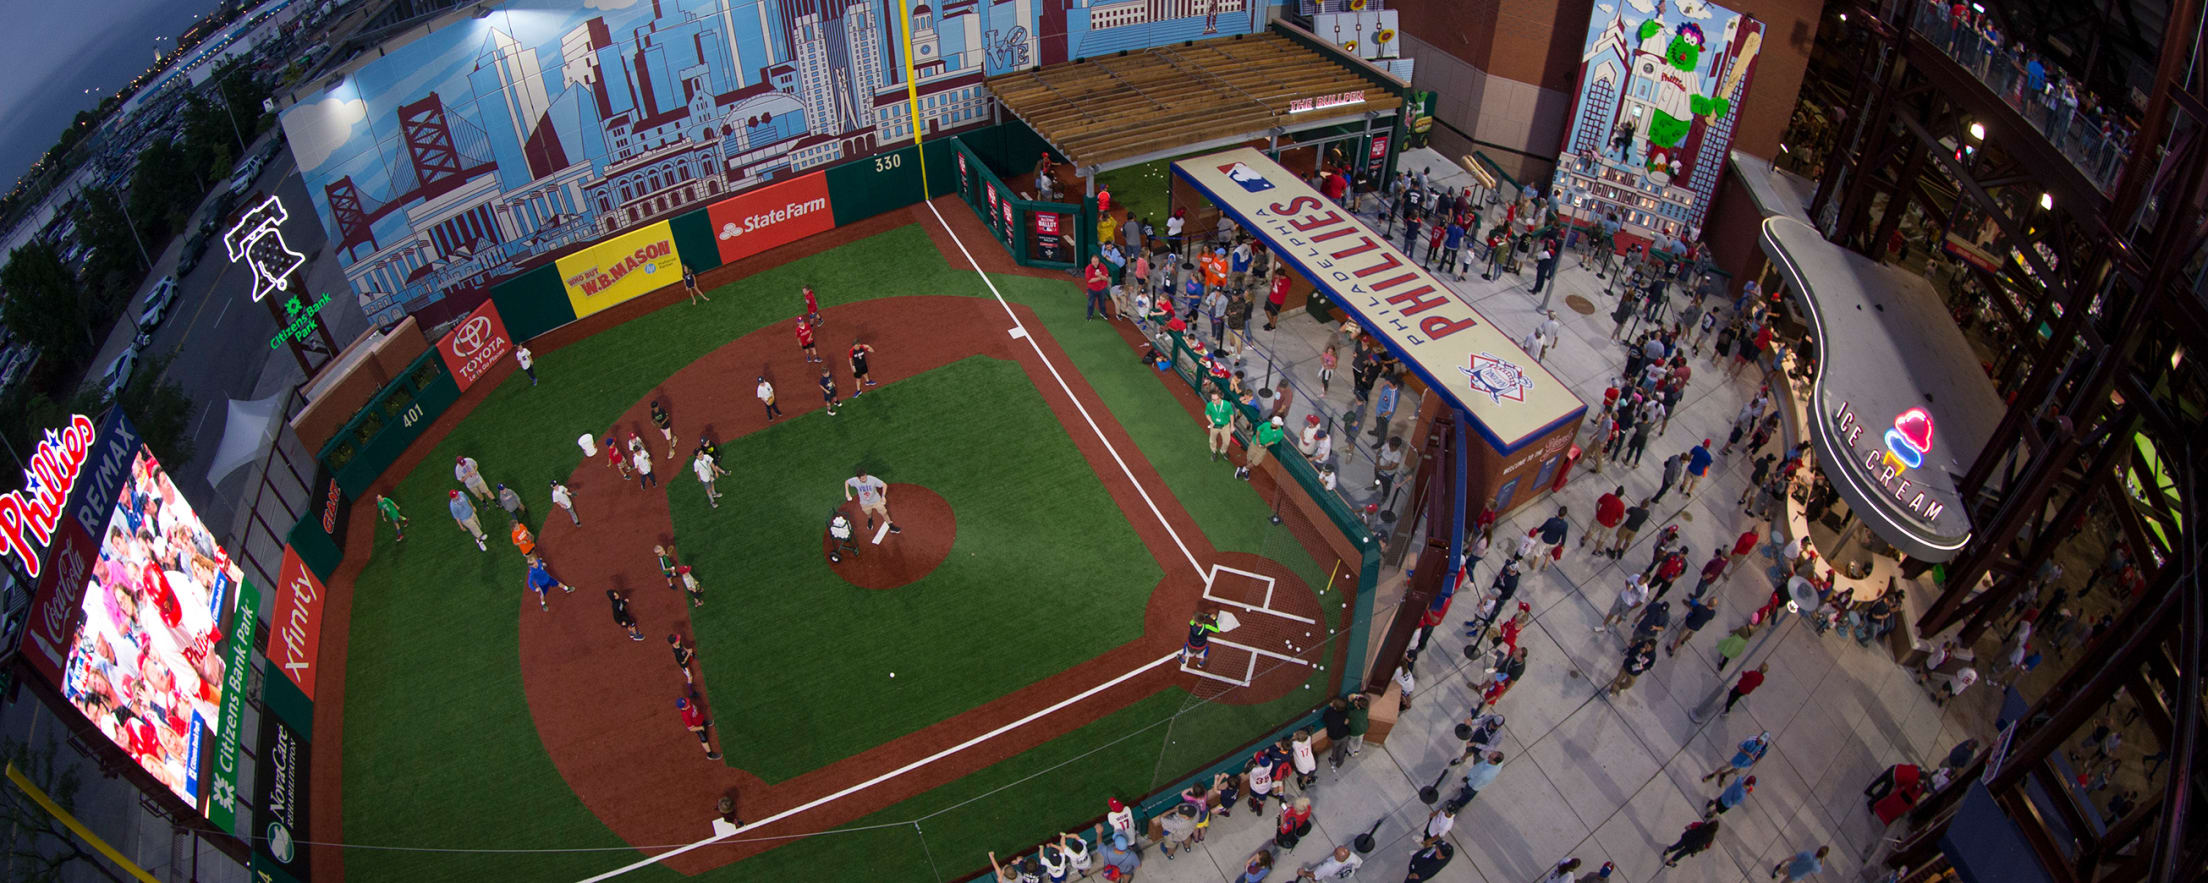 Iconic Baseball Stadium Fountain Gets New Life